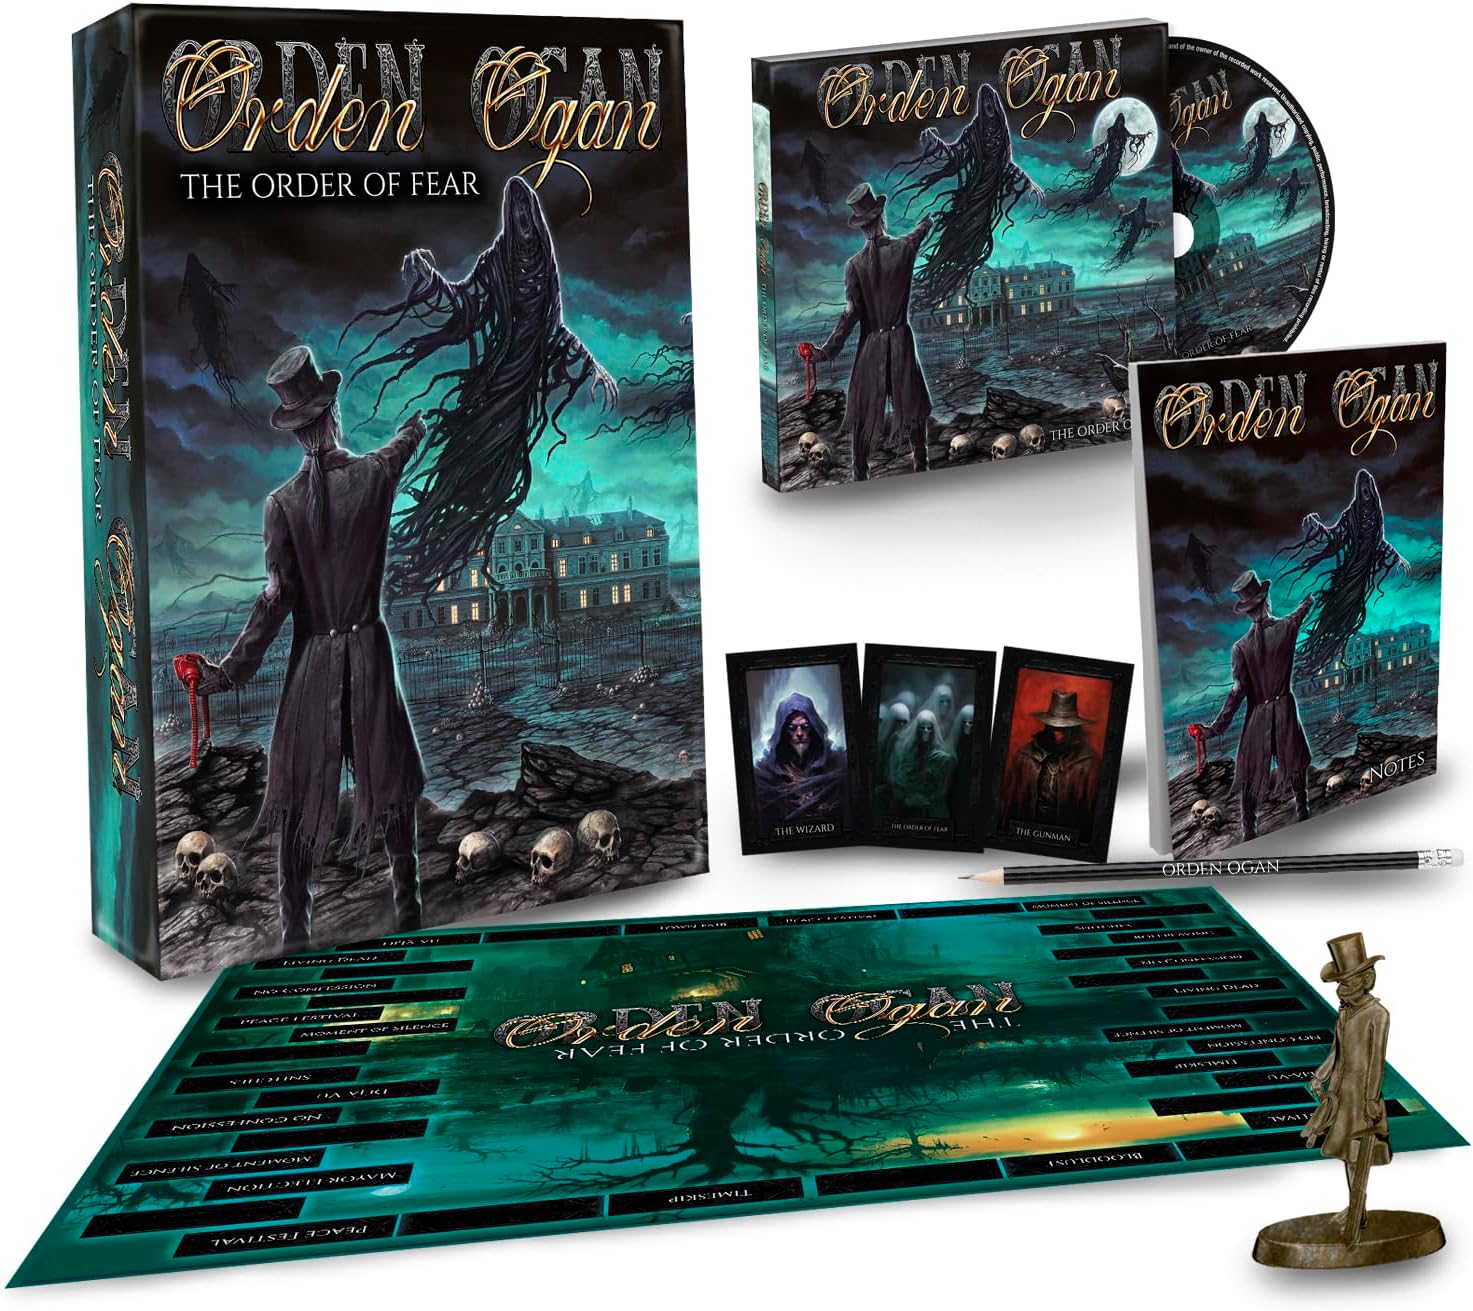 Orden Ogan "The Order Of Fear" Ltd Edition CD Box Set - PRE-ORDER